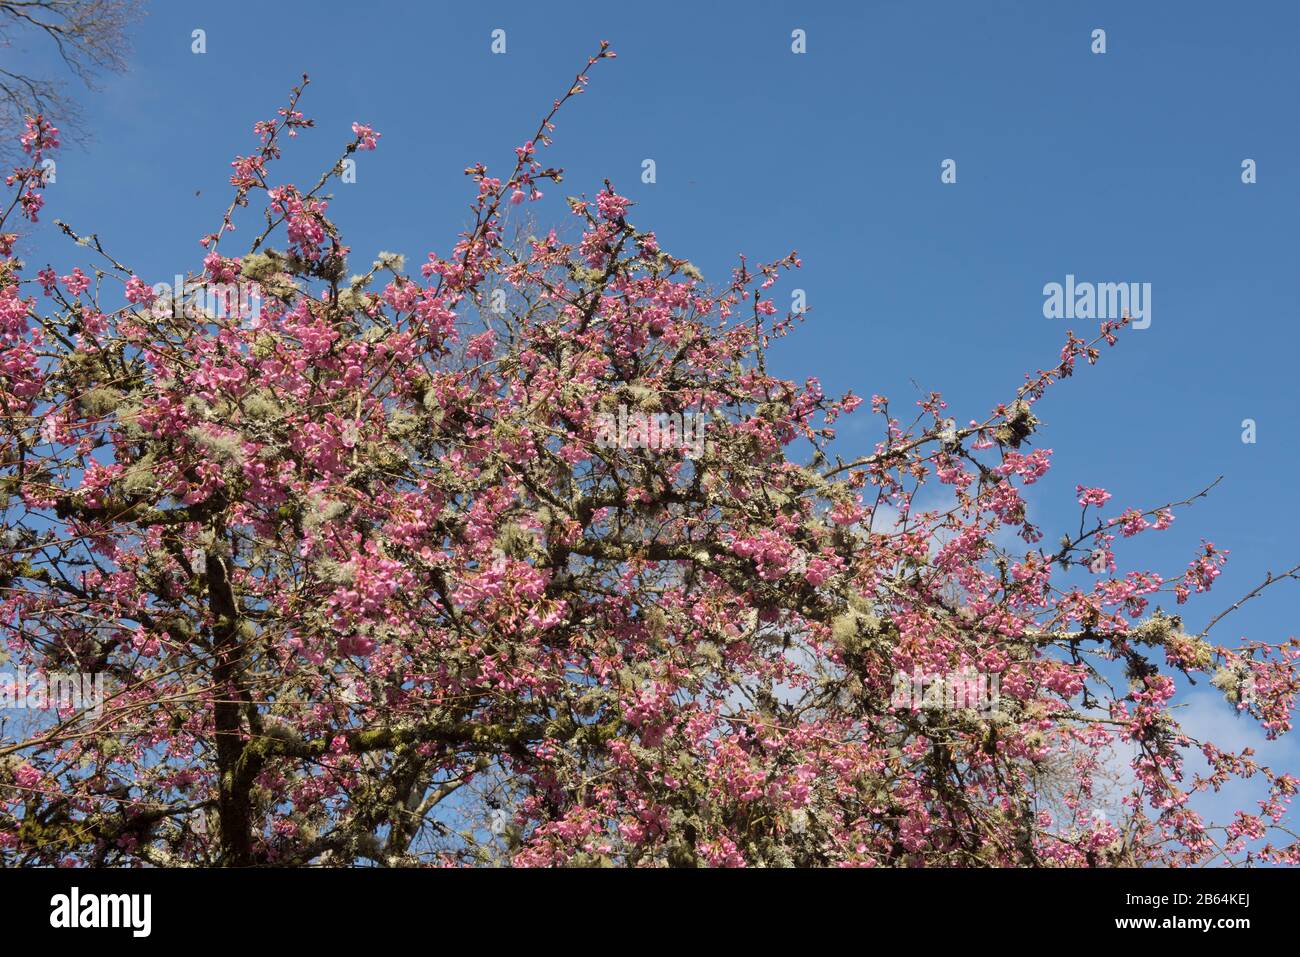 Winter Pink Blossom Of An Ornamental Cherry Tree Prunus Kursar In A Country Cottage Garden In Rural Devon England Uk Stock Photo Alamy